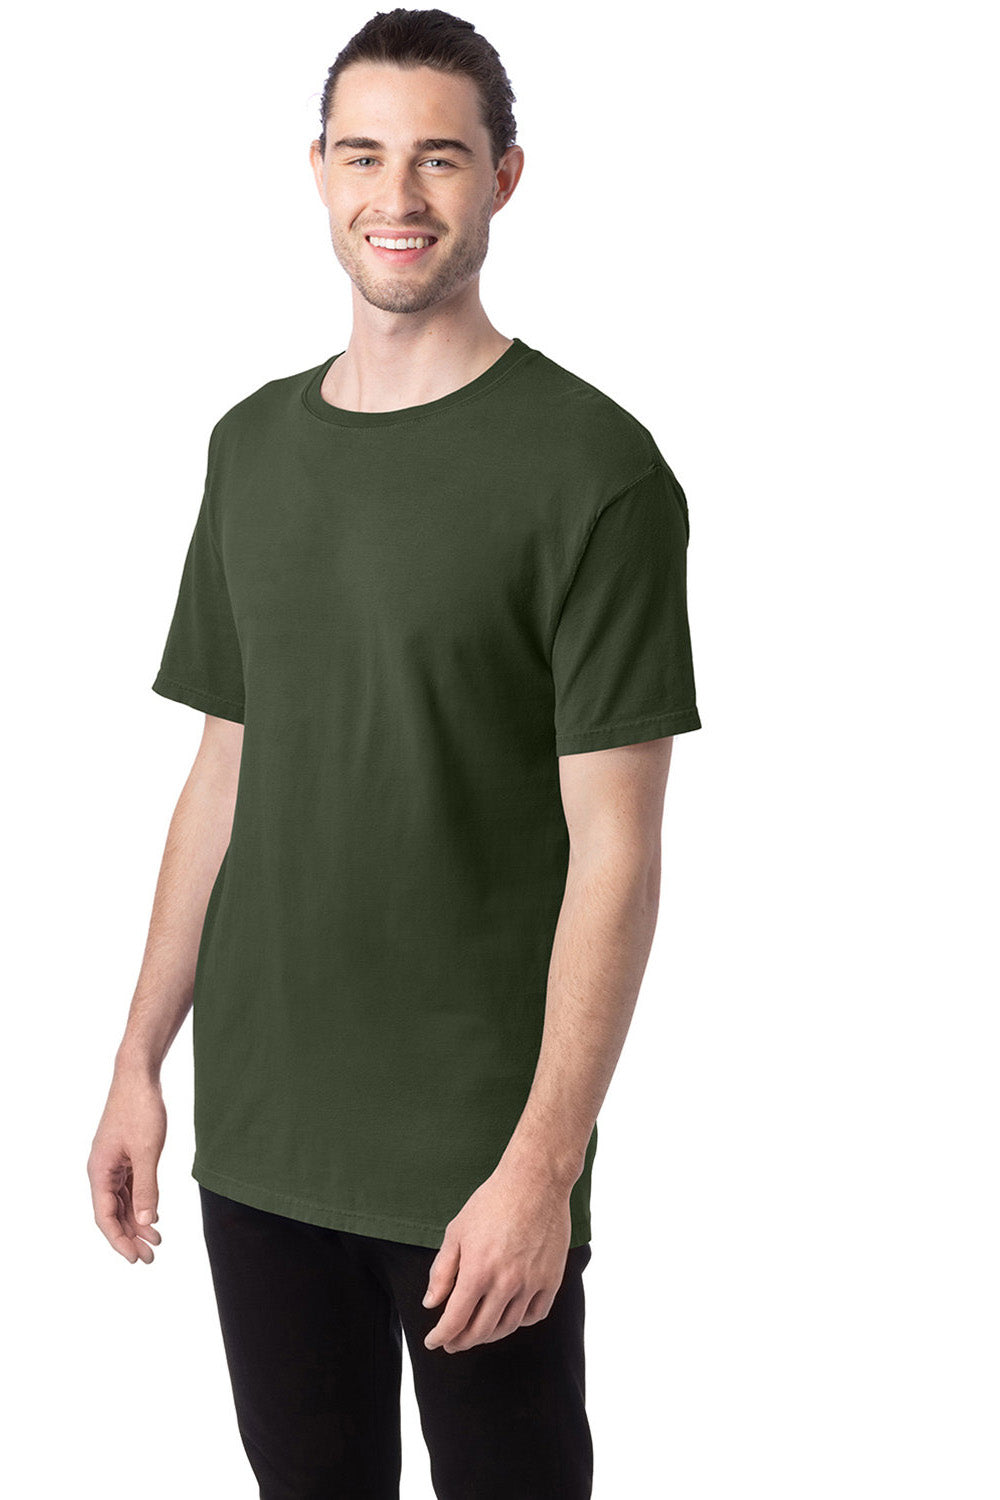 ComfortWash by Hanes GDH100 Mens Short Sleeve Crewneck T-Shirt Moss Green 3Q